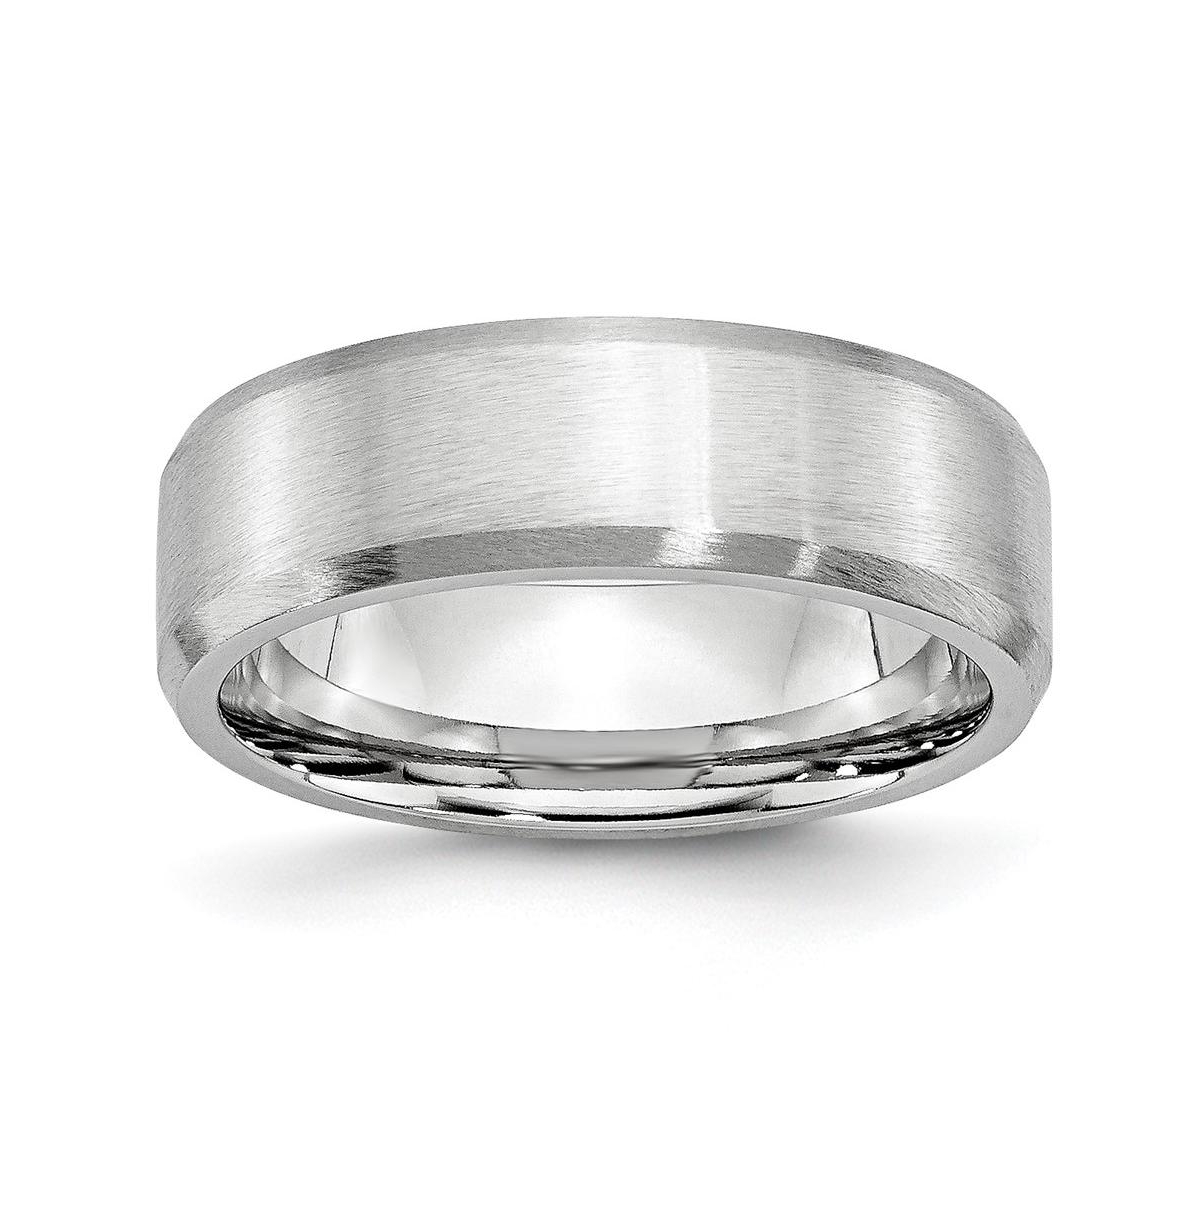 Cobalt Beveled Edge Satin Wedding Band Ring